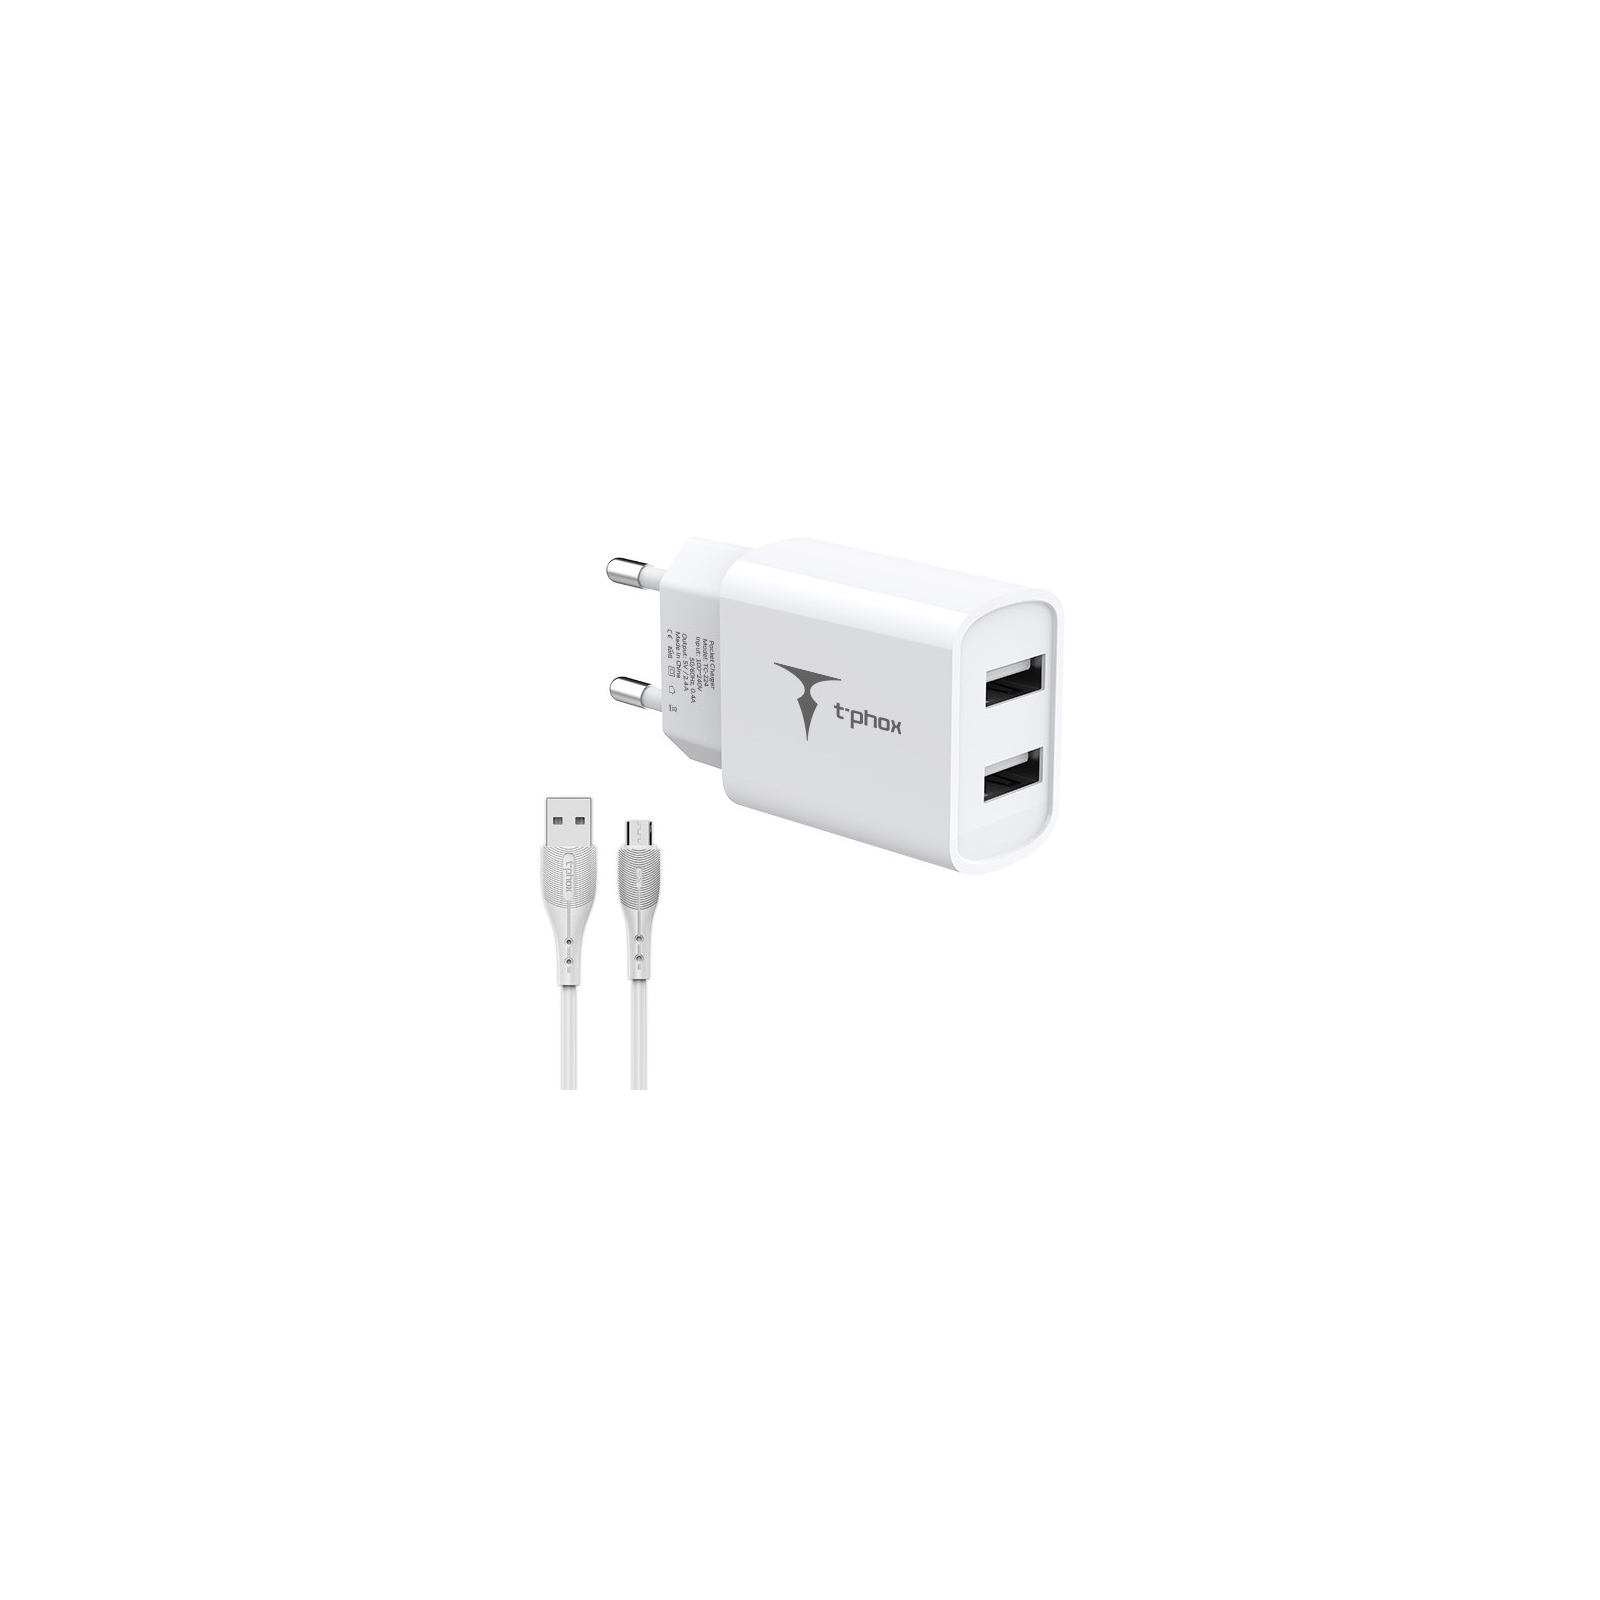 Зарядное устройство T-Phox TCC-224 Pocket Dual USB + MicroUSB cable White (TCC-224 (W)+Micro) изображение 2